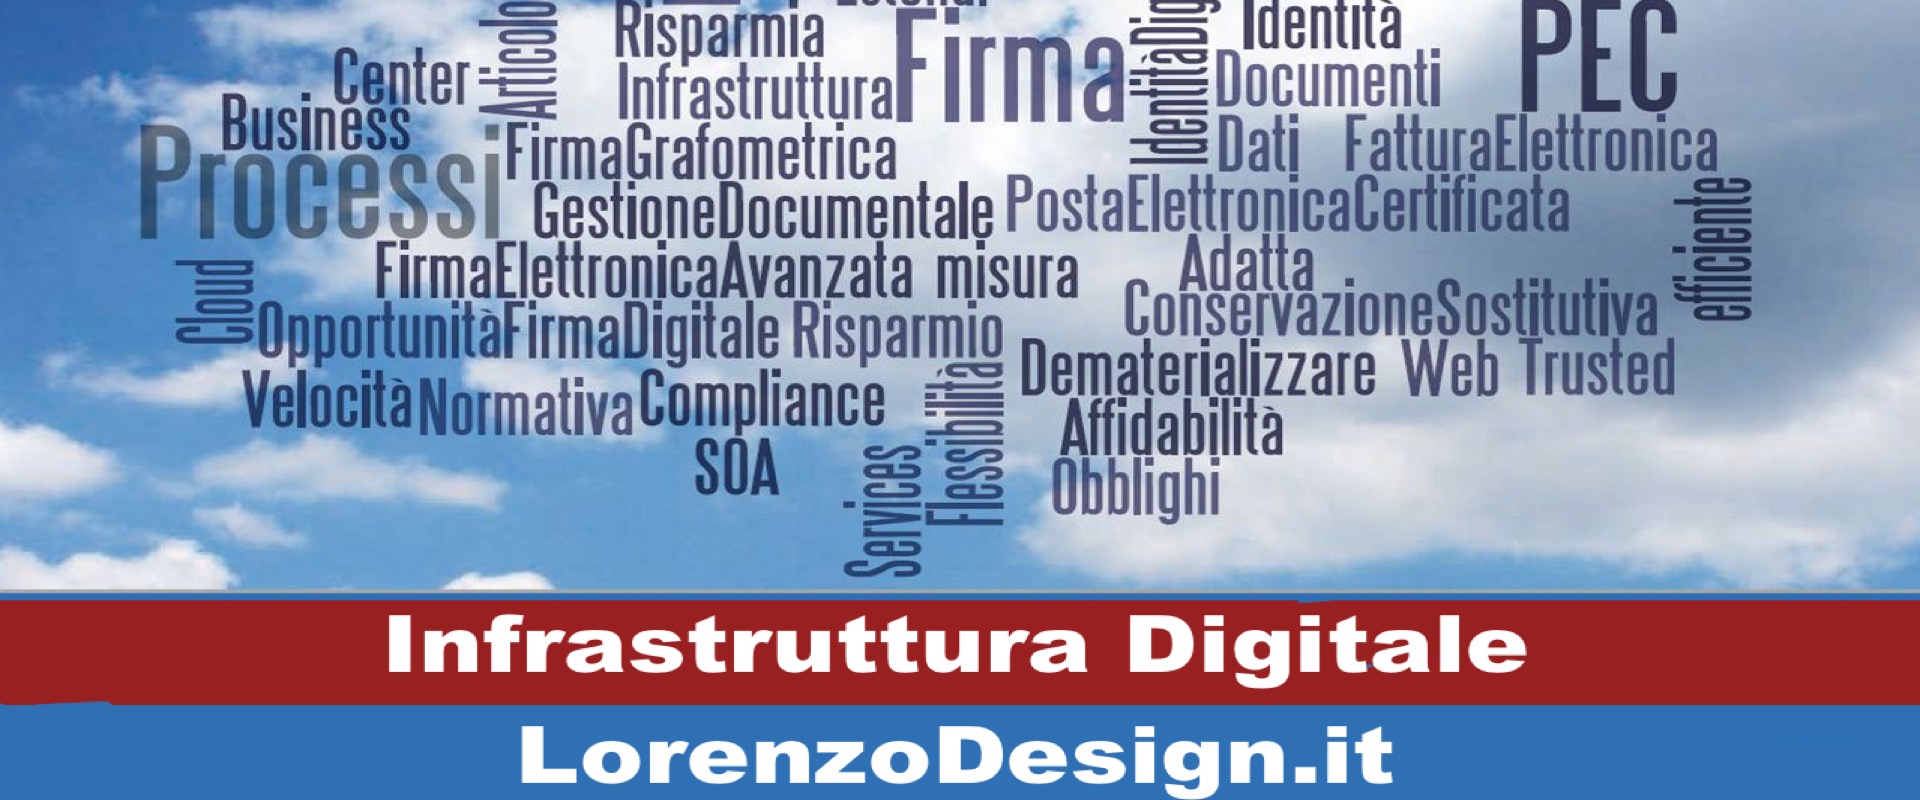 infrastruttura digitale-lorenzo-design-it